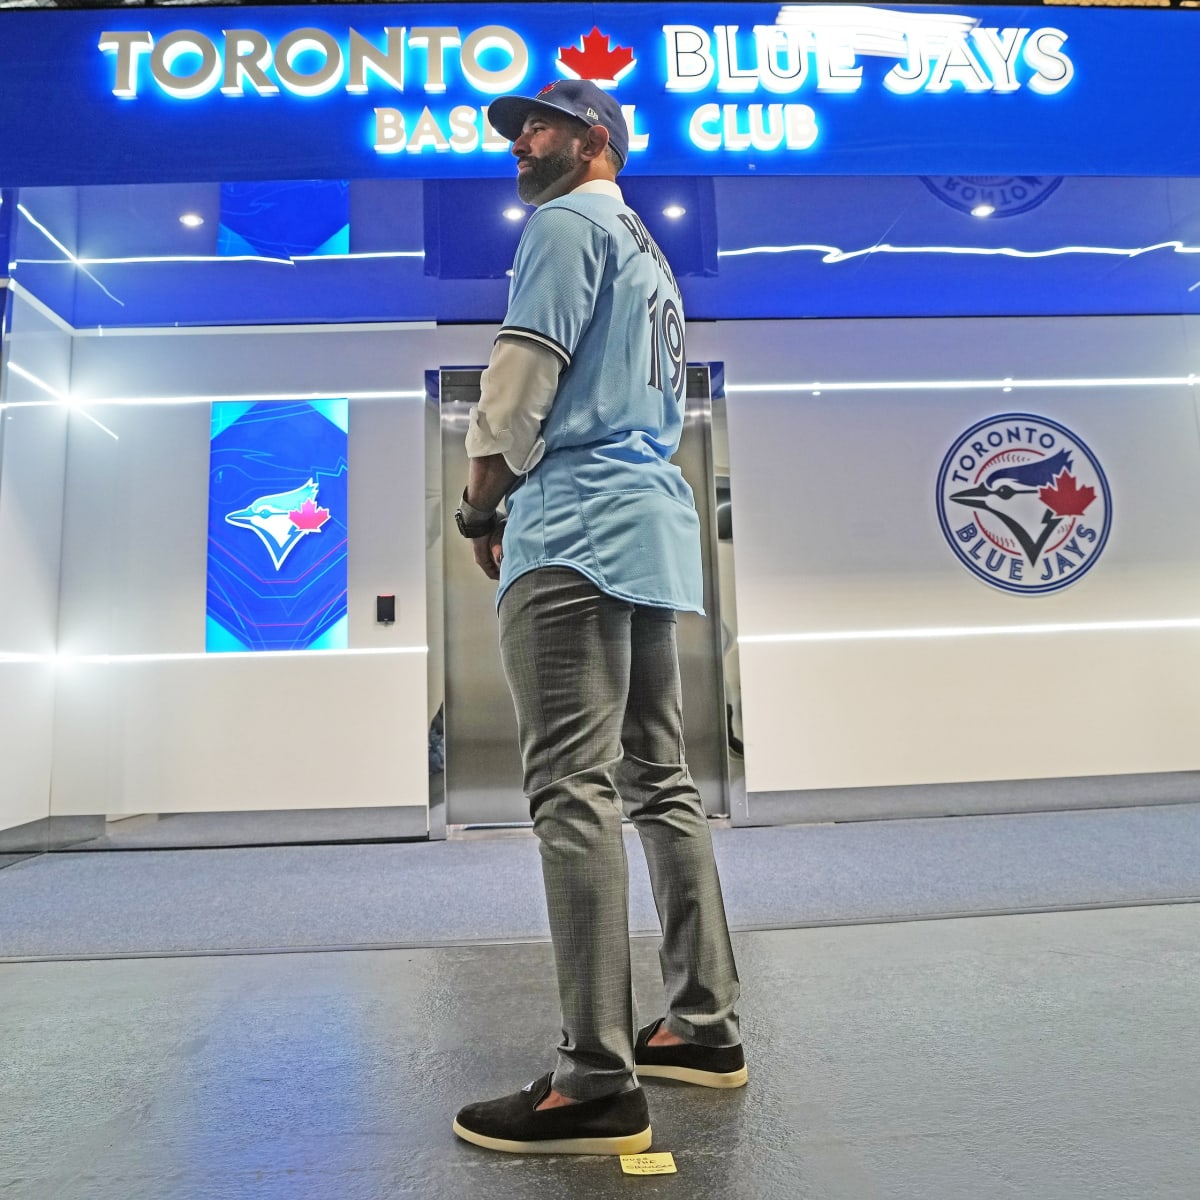 Toronto Blue Jays: Jose Bautista bat flip remains an iconic moment